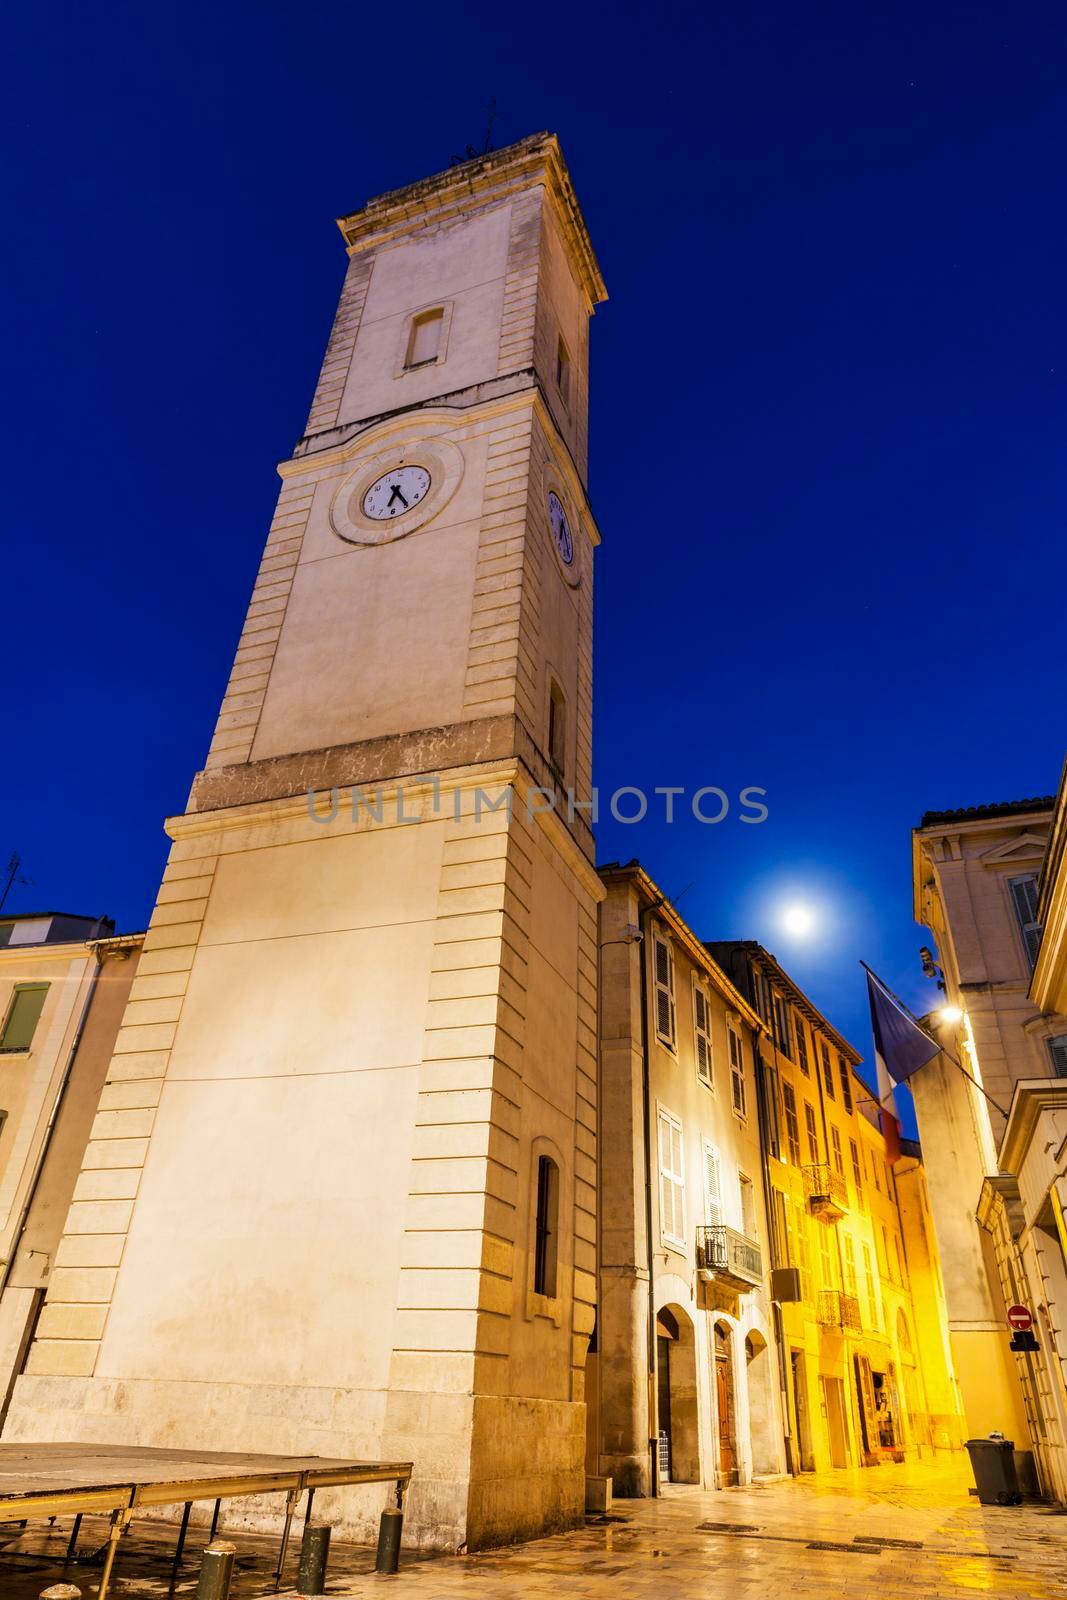 Clock Tower on Place de l'Horloge in Nimes by benkrut